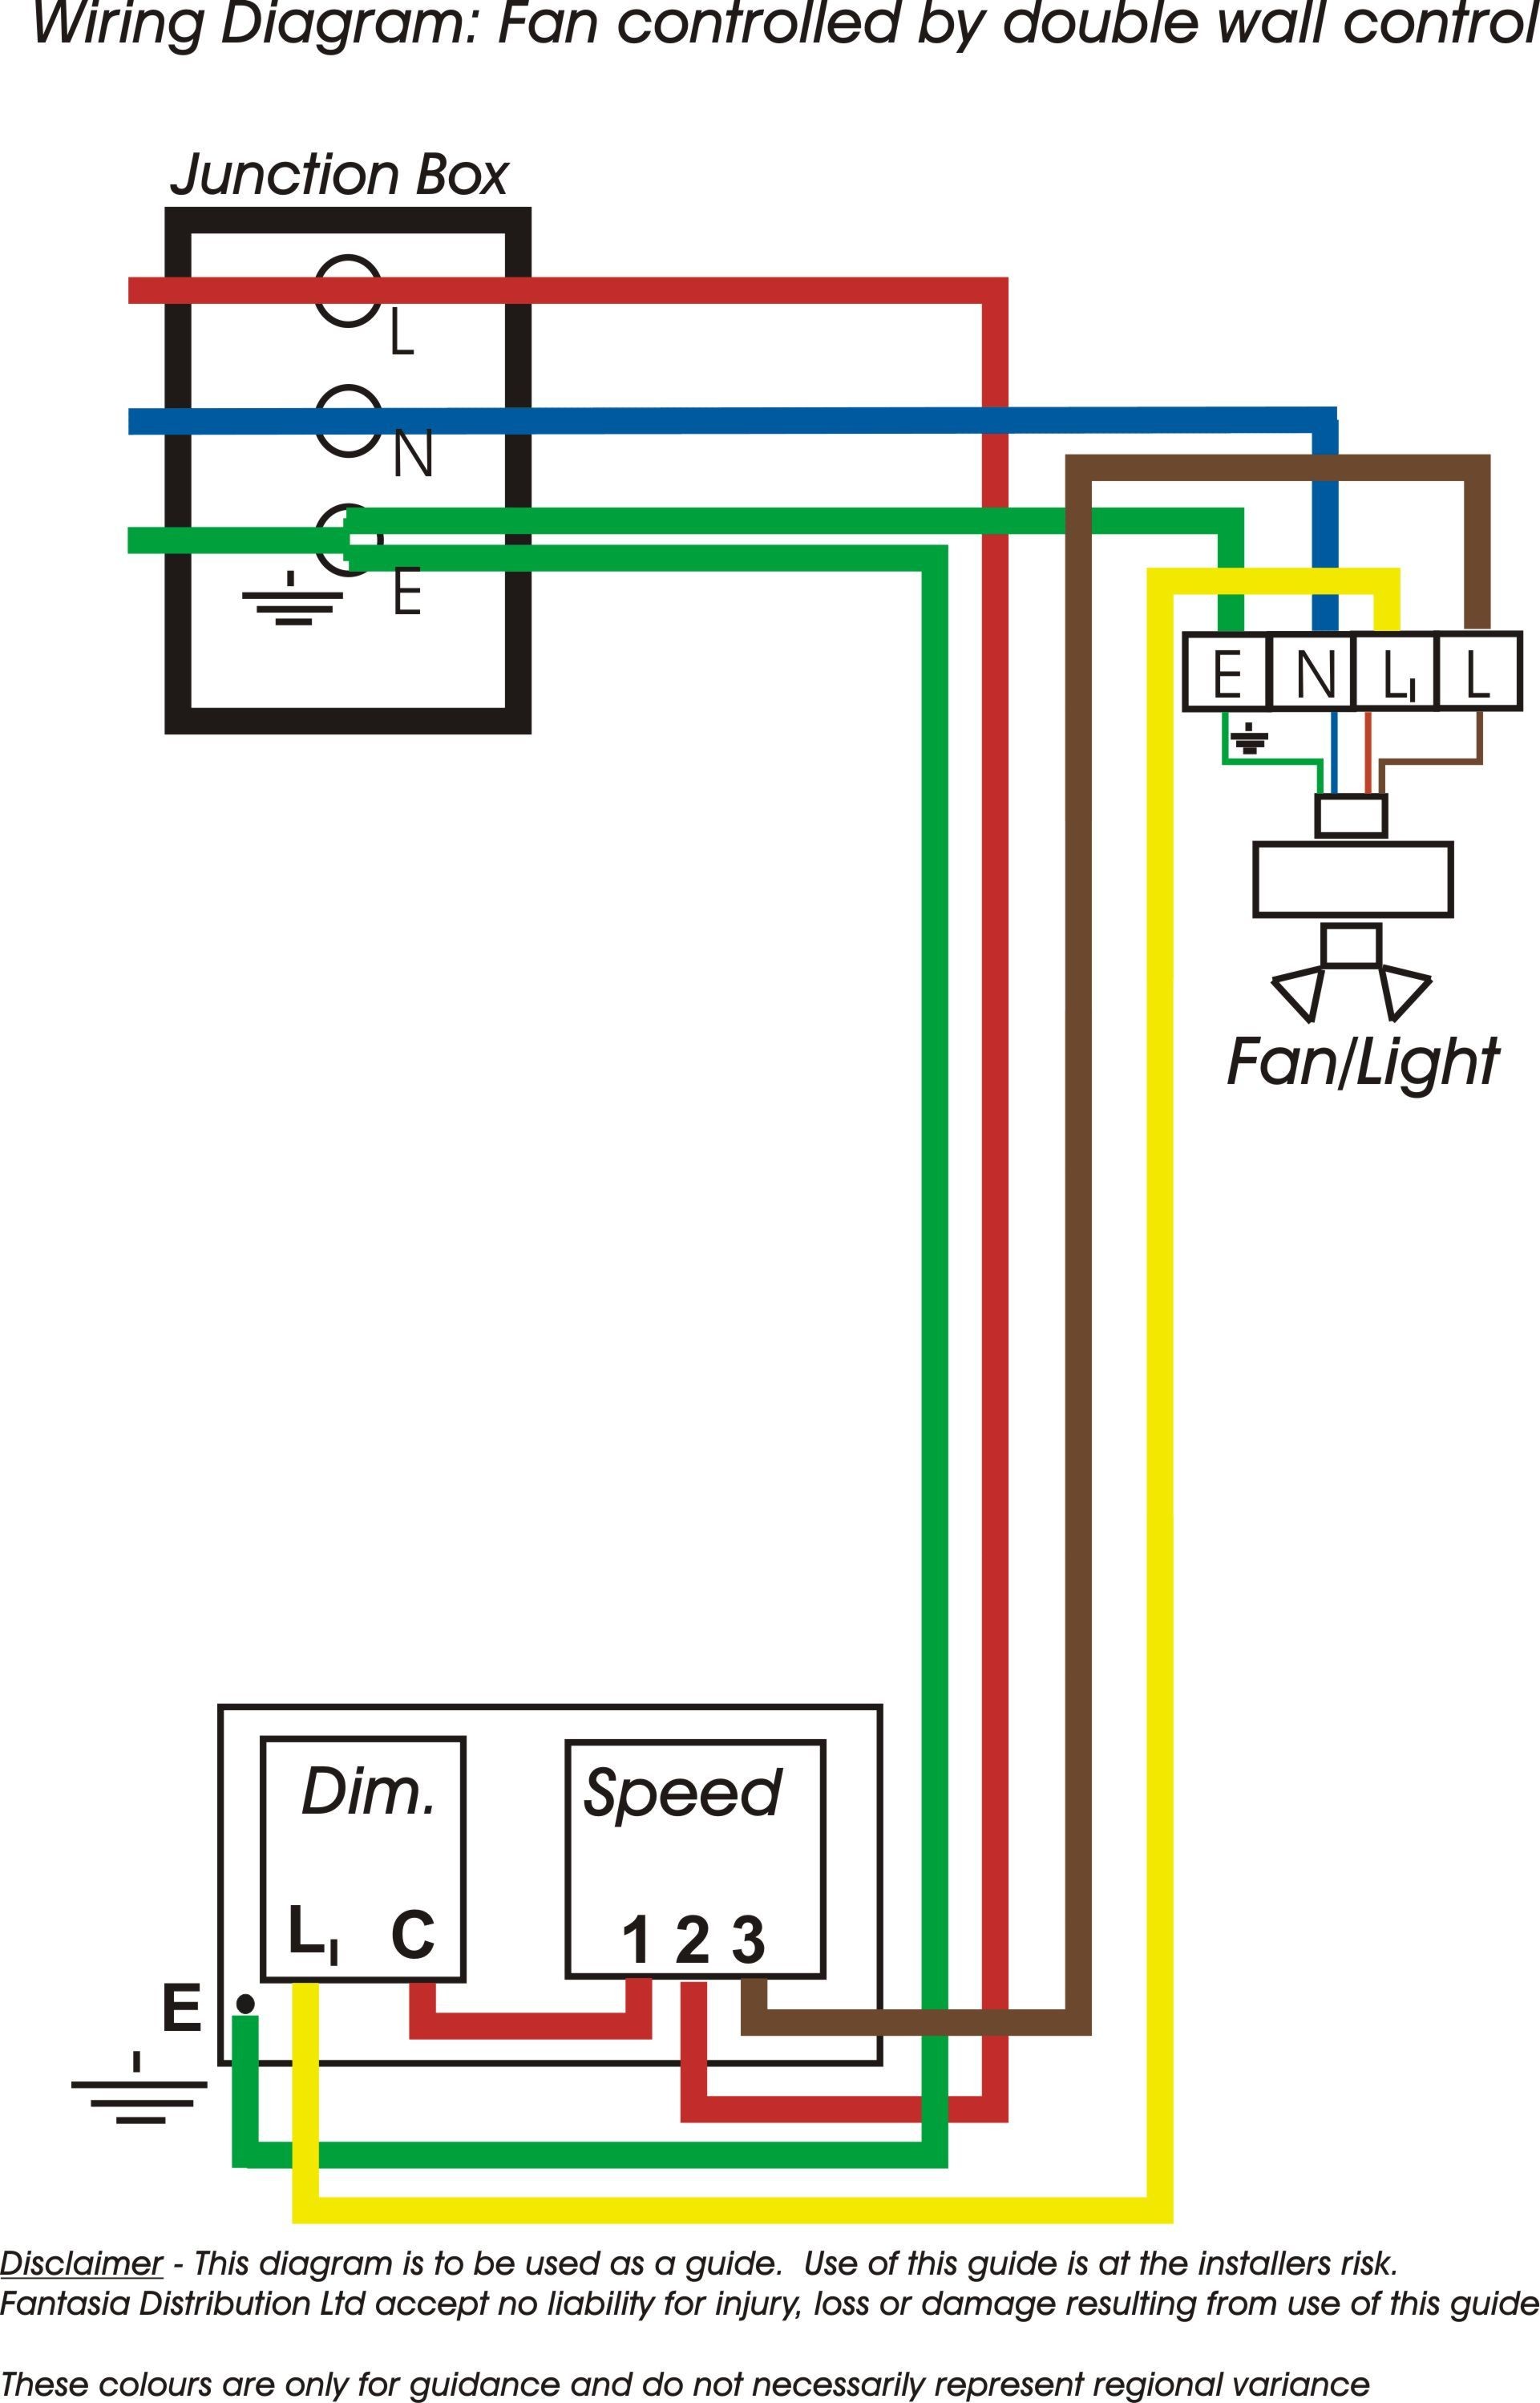 Wiring Diagram for Two Speed attic Fan Switch Wiring Diagram for Ceiling Fan with Light Switch